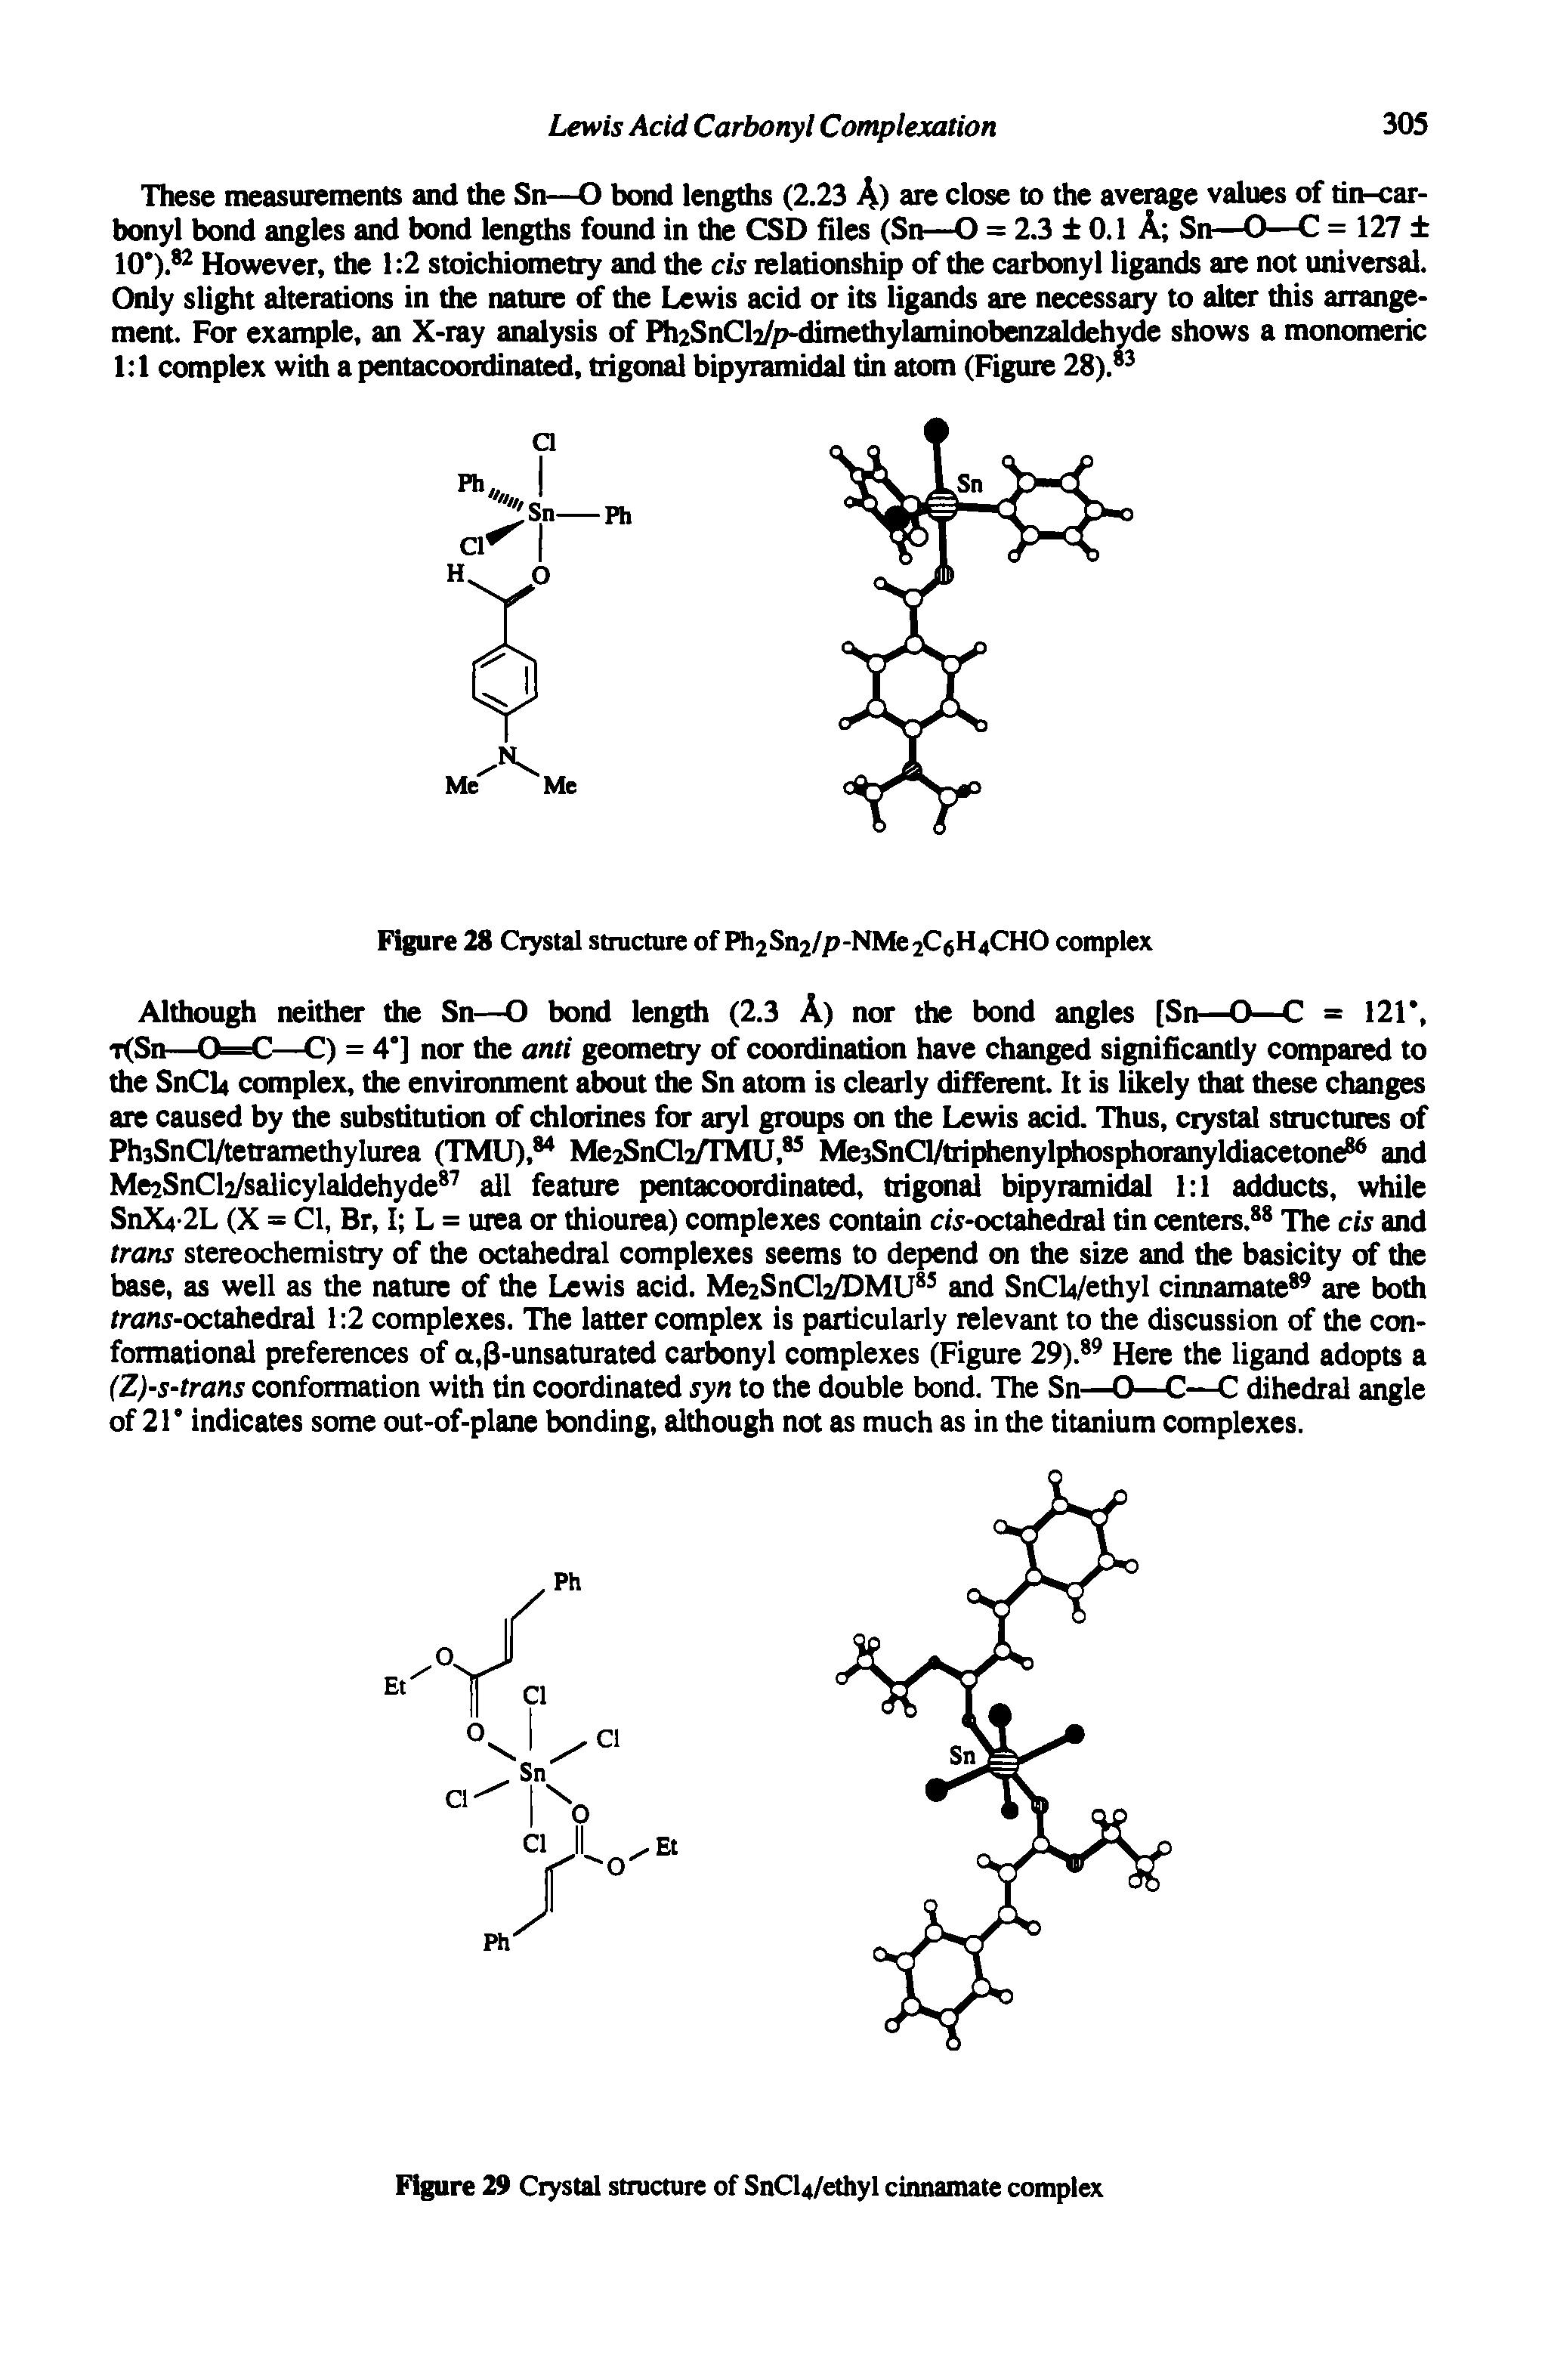 Figure 29 Crystal structure of SnCU/ethyl cinnamate complex...